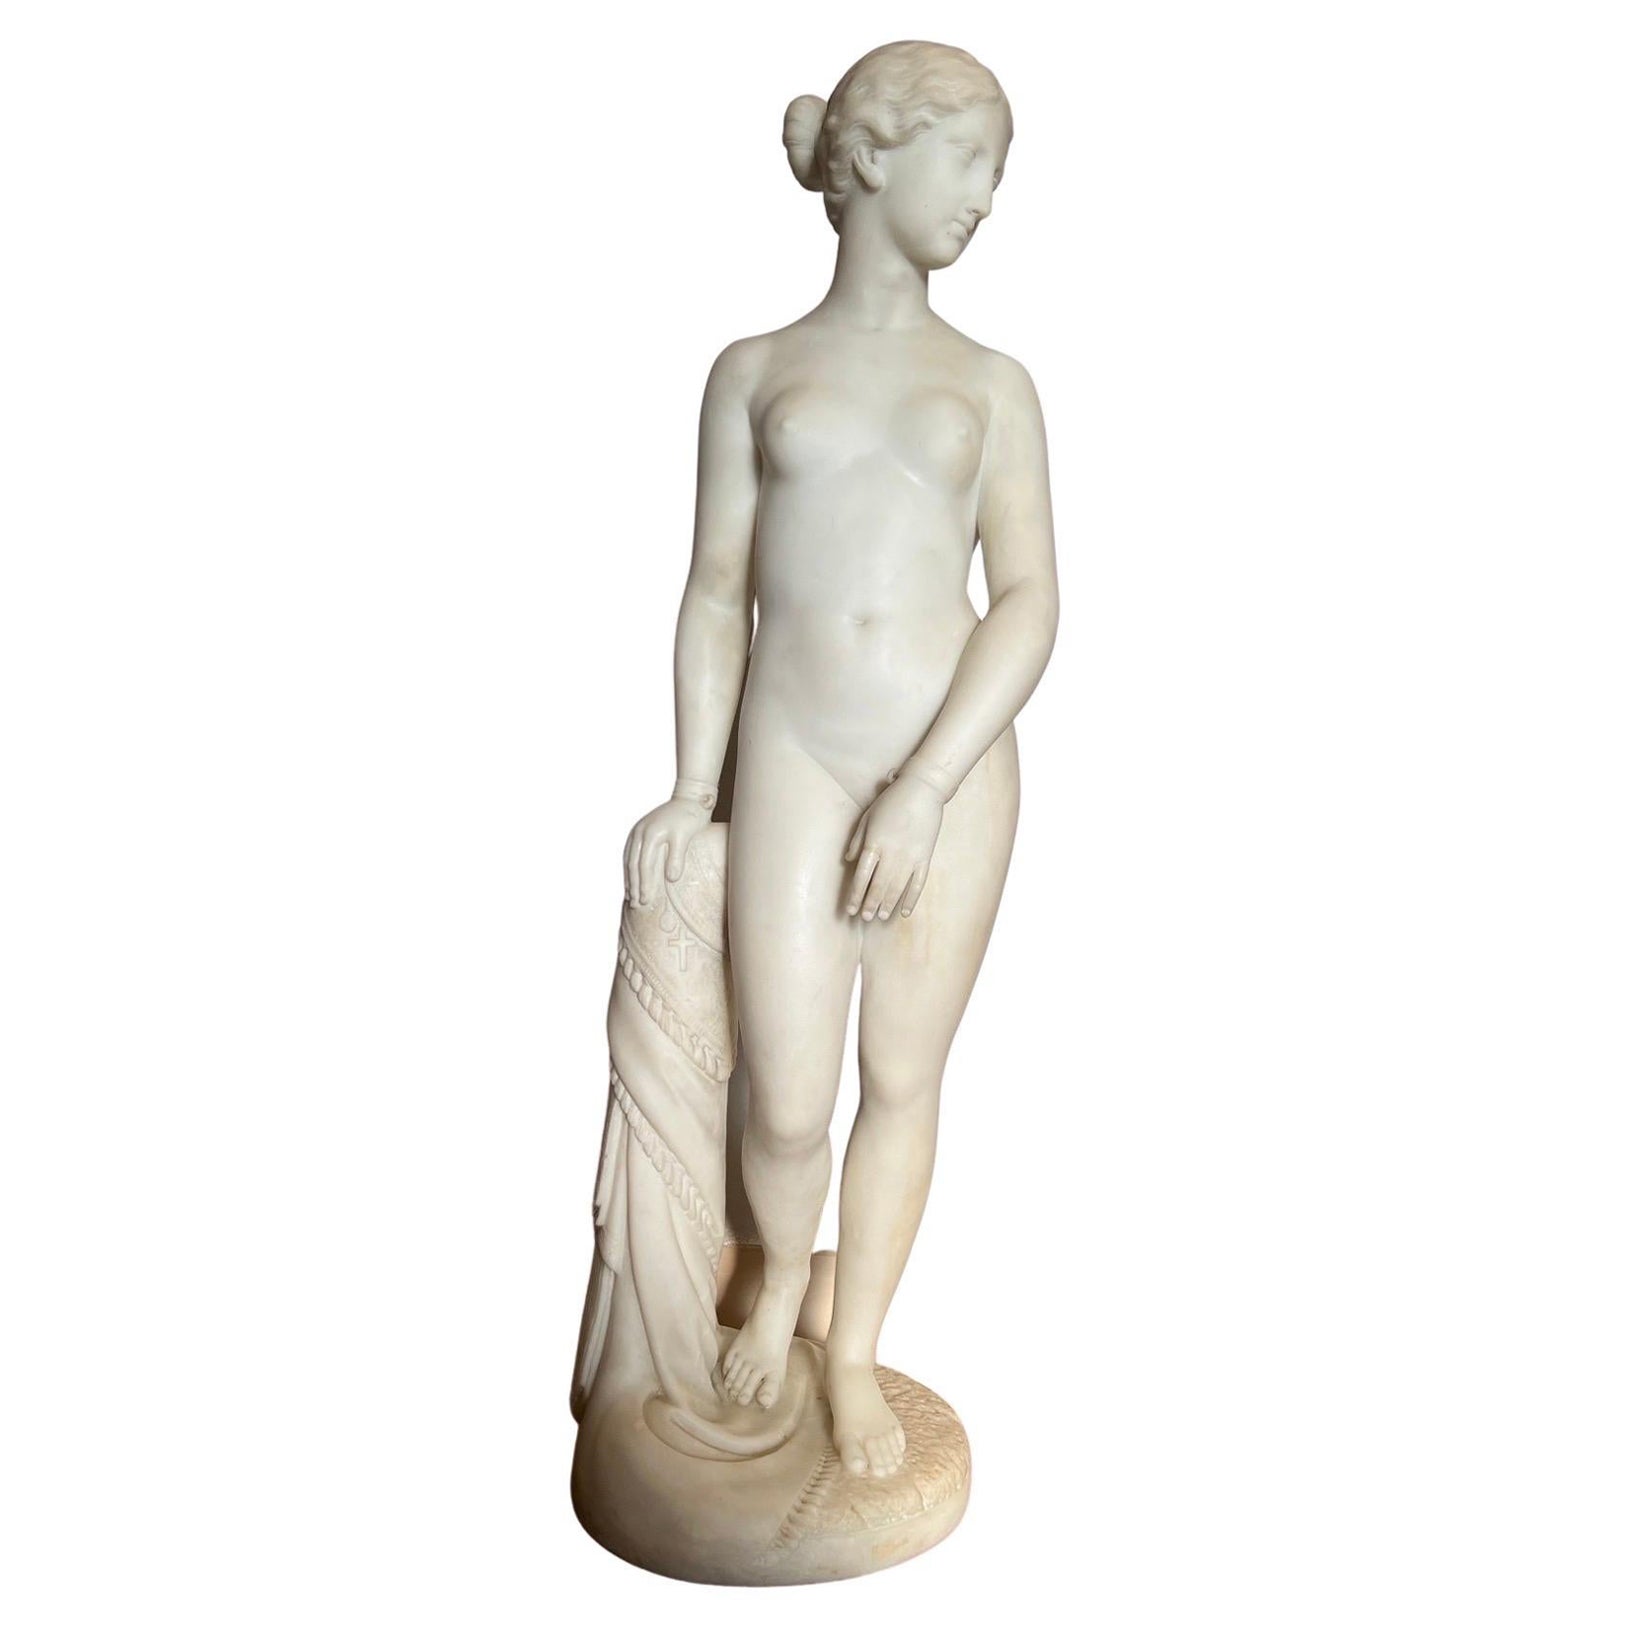 D'après Hiram Powers, sculpture en marbre Grand Tour du esclave grec